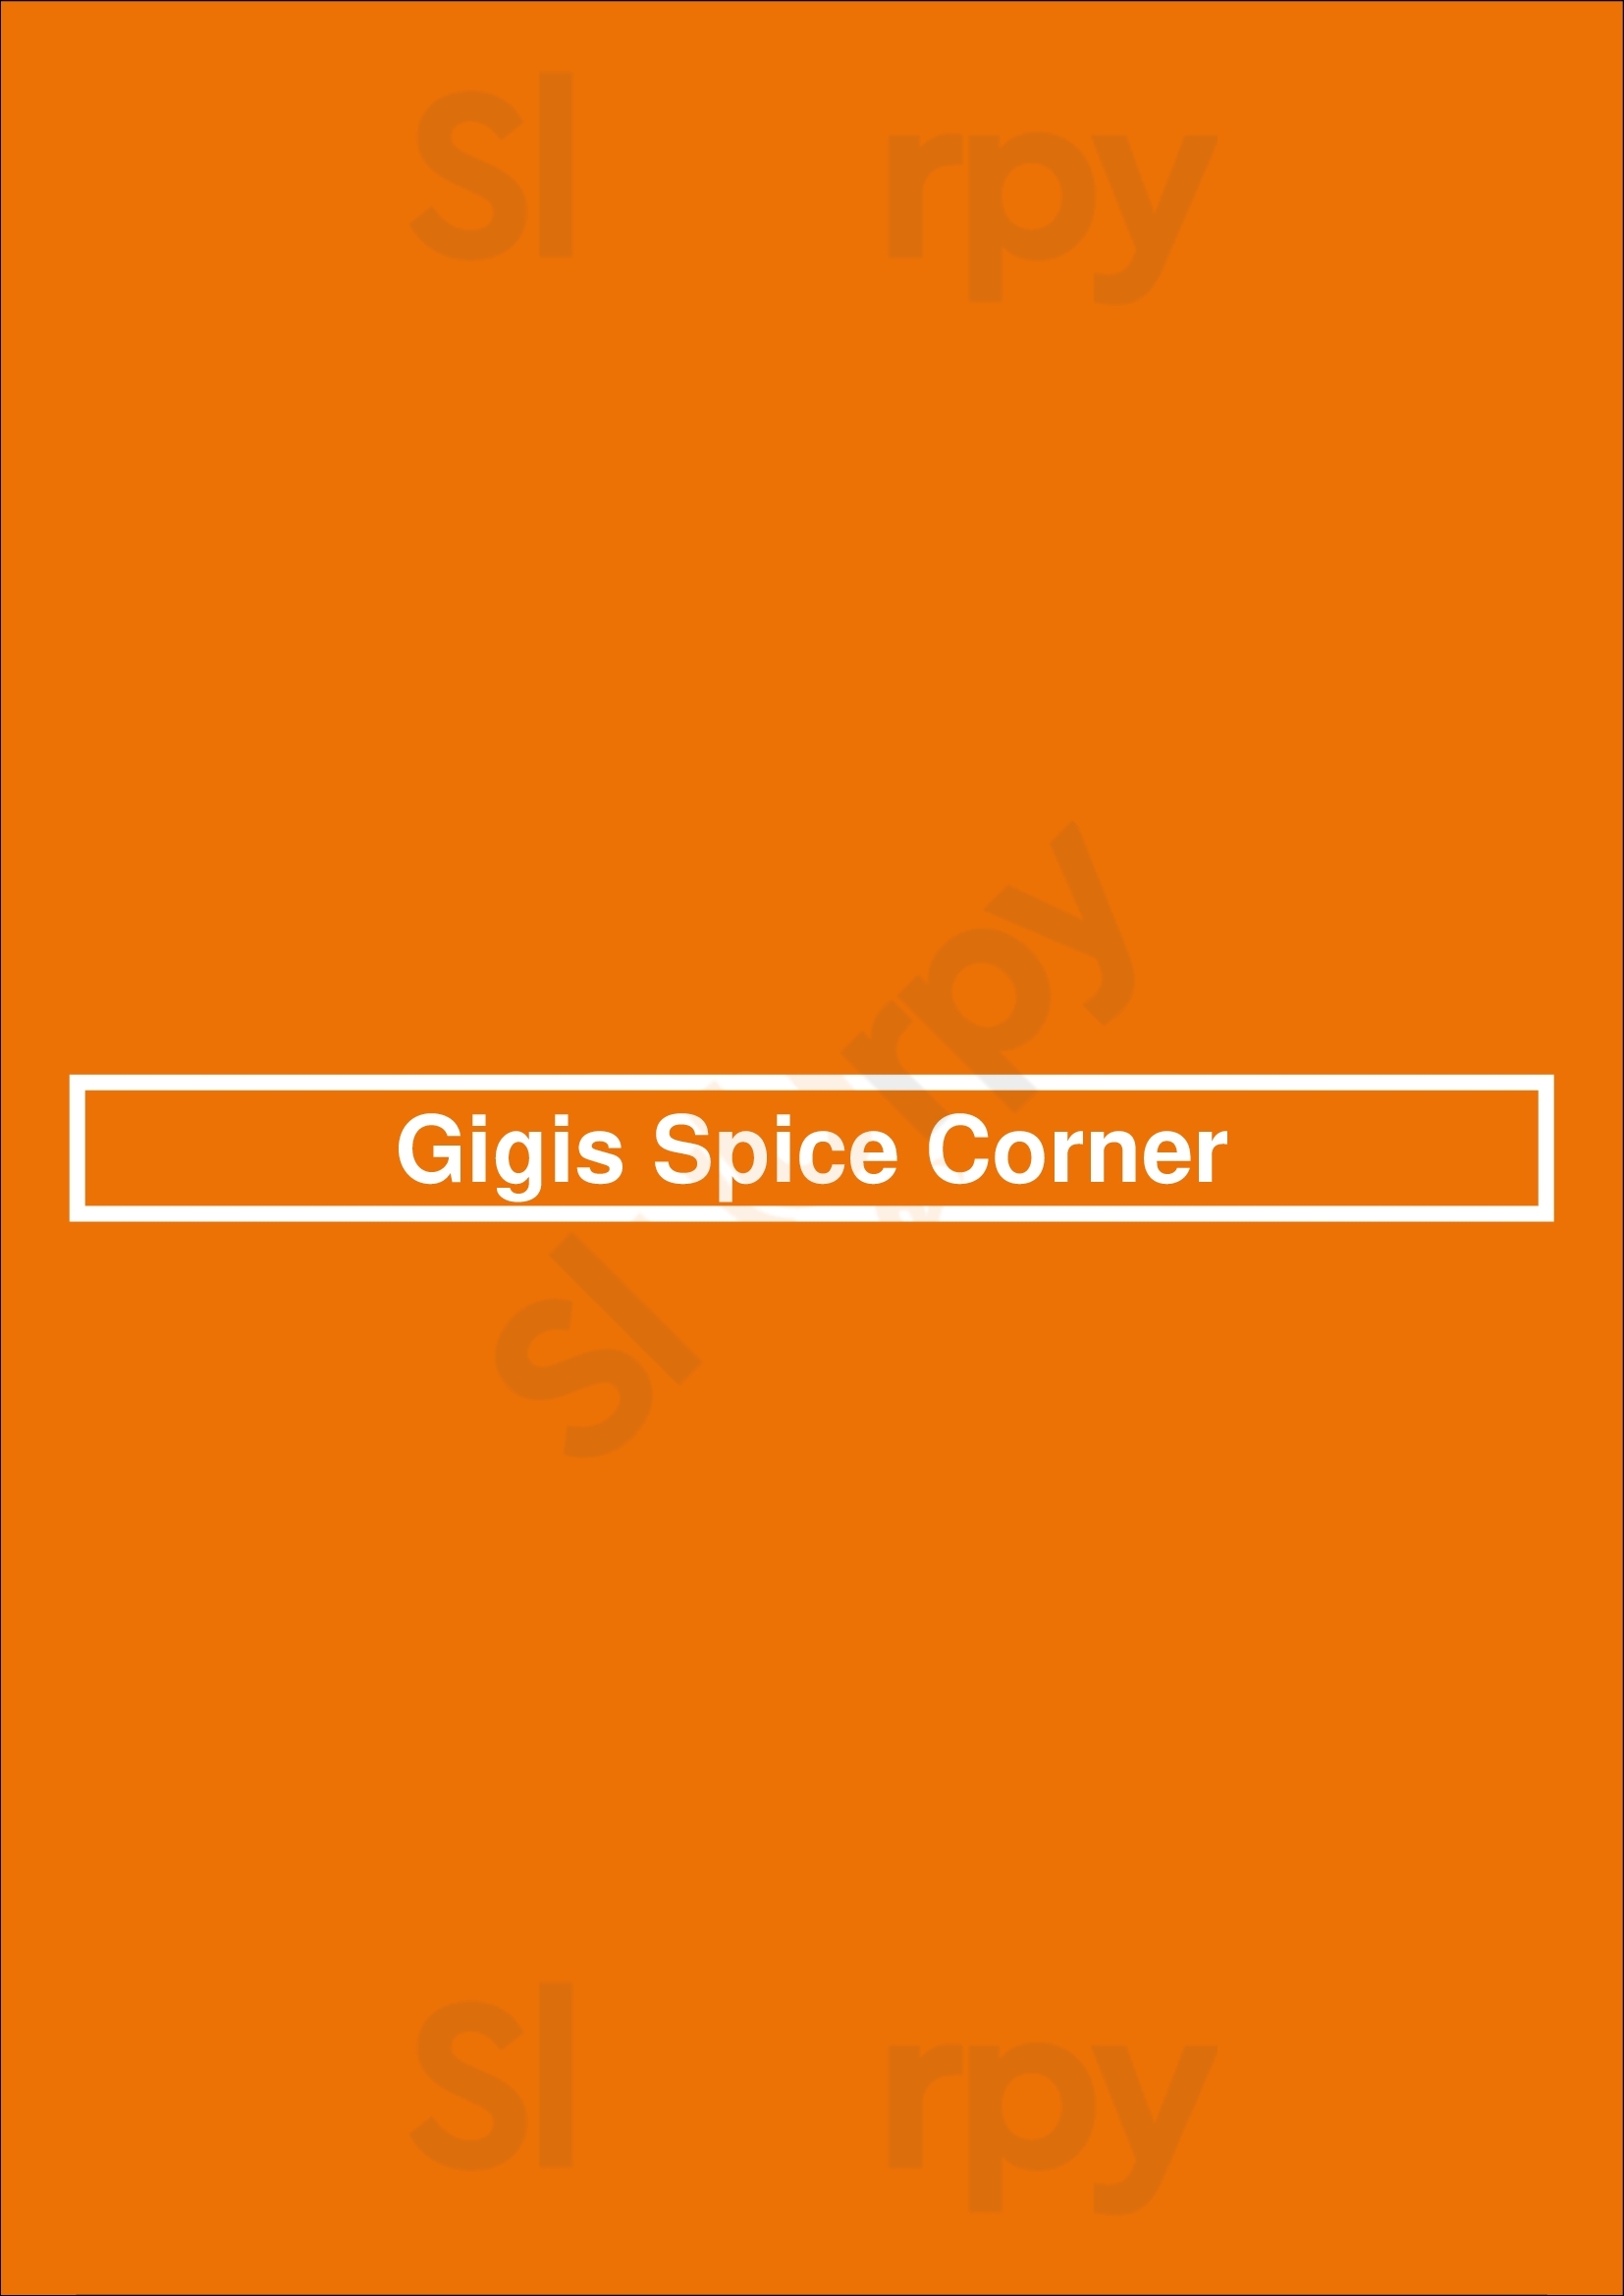 Gigis Spice Corner London Menu - 1